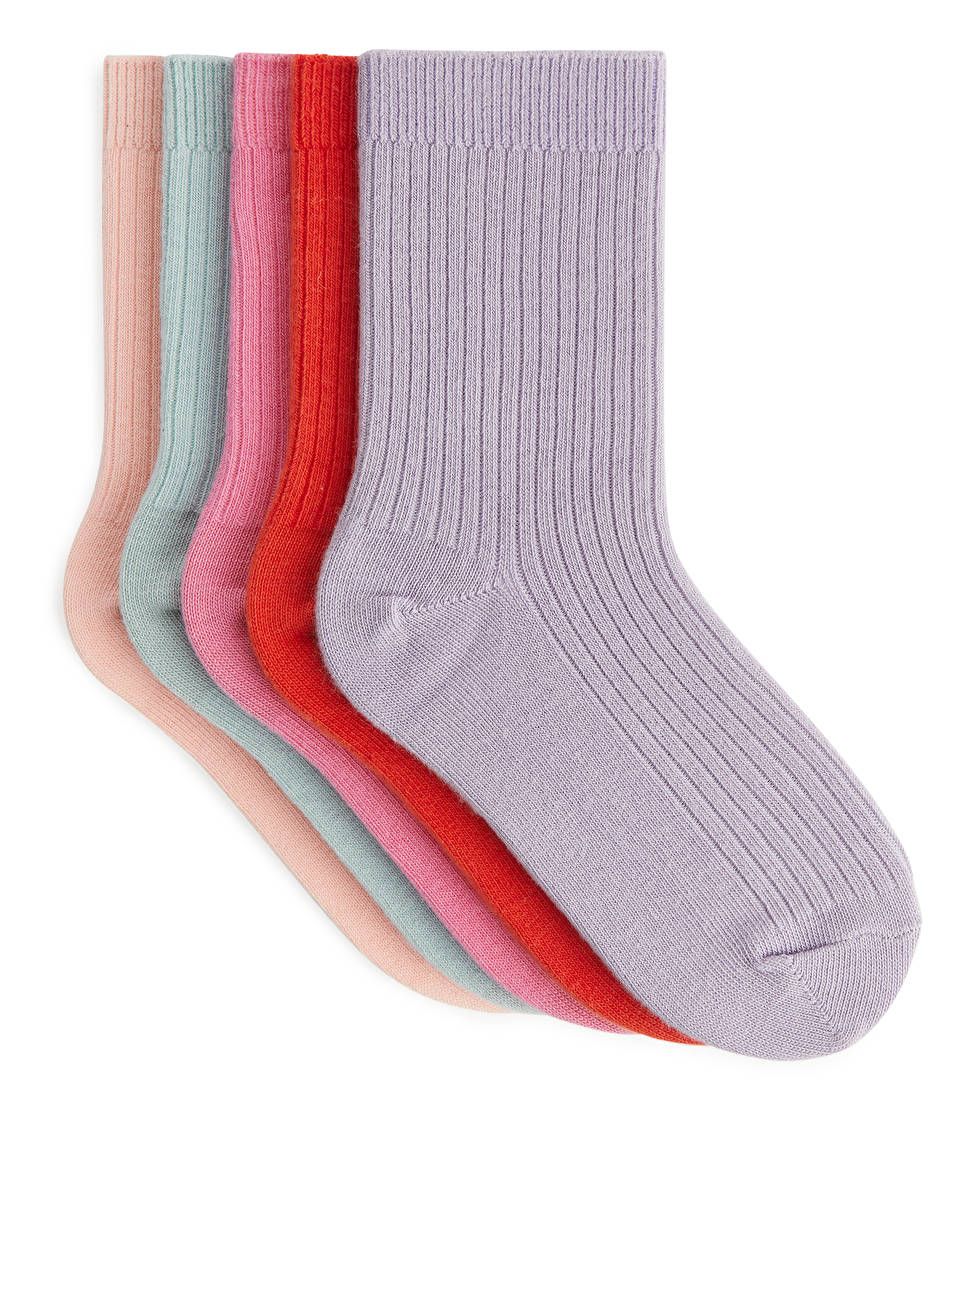 Rib Knit Socks - Pink/Pastels - Underwear & Nightwear - ARKET GB | ARKET (US&UK)